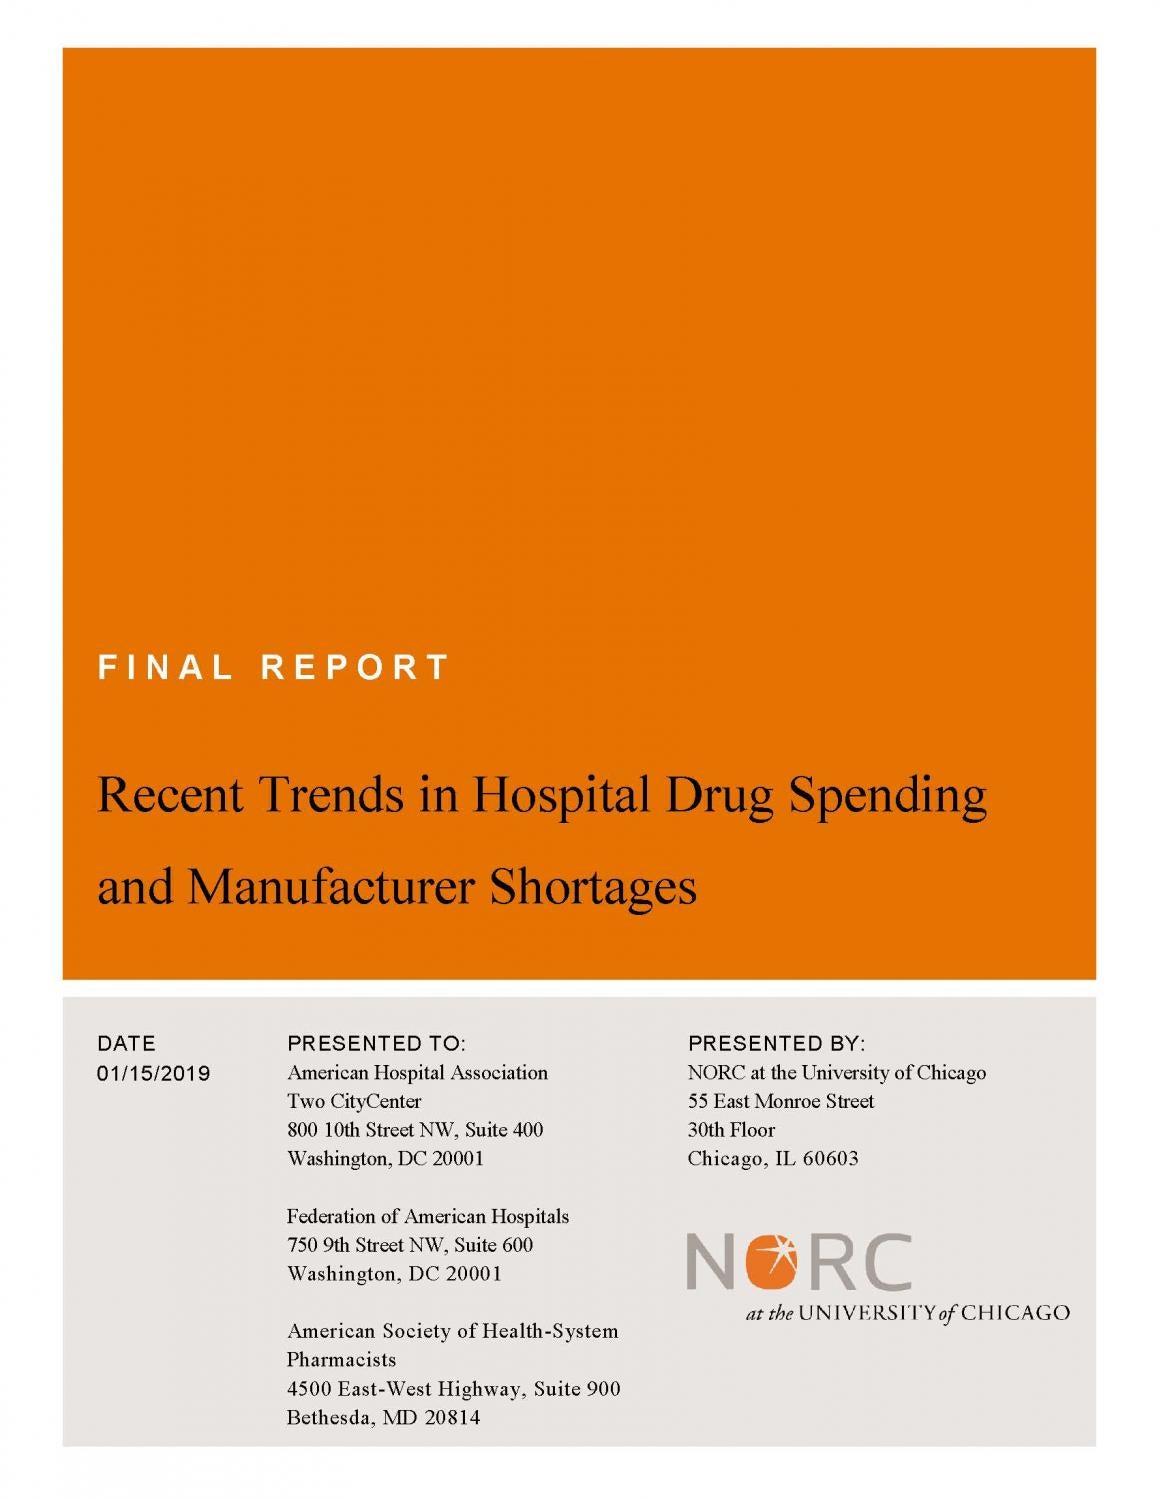 Recent Trends in Hospital Drug Spending and Manufacturer Shortages Final Report cover